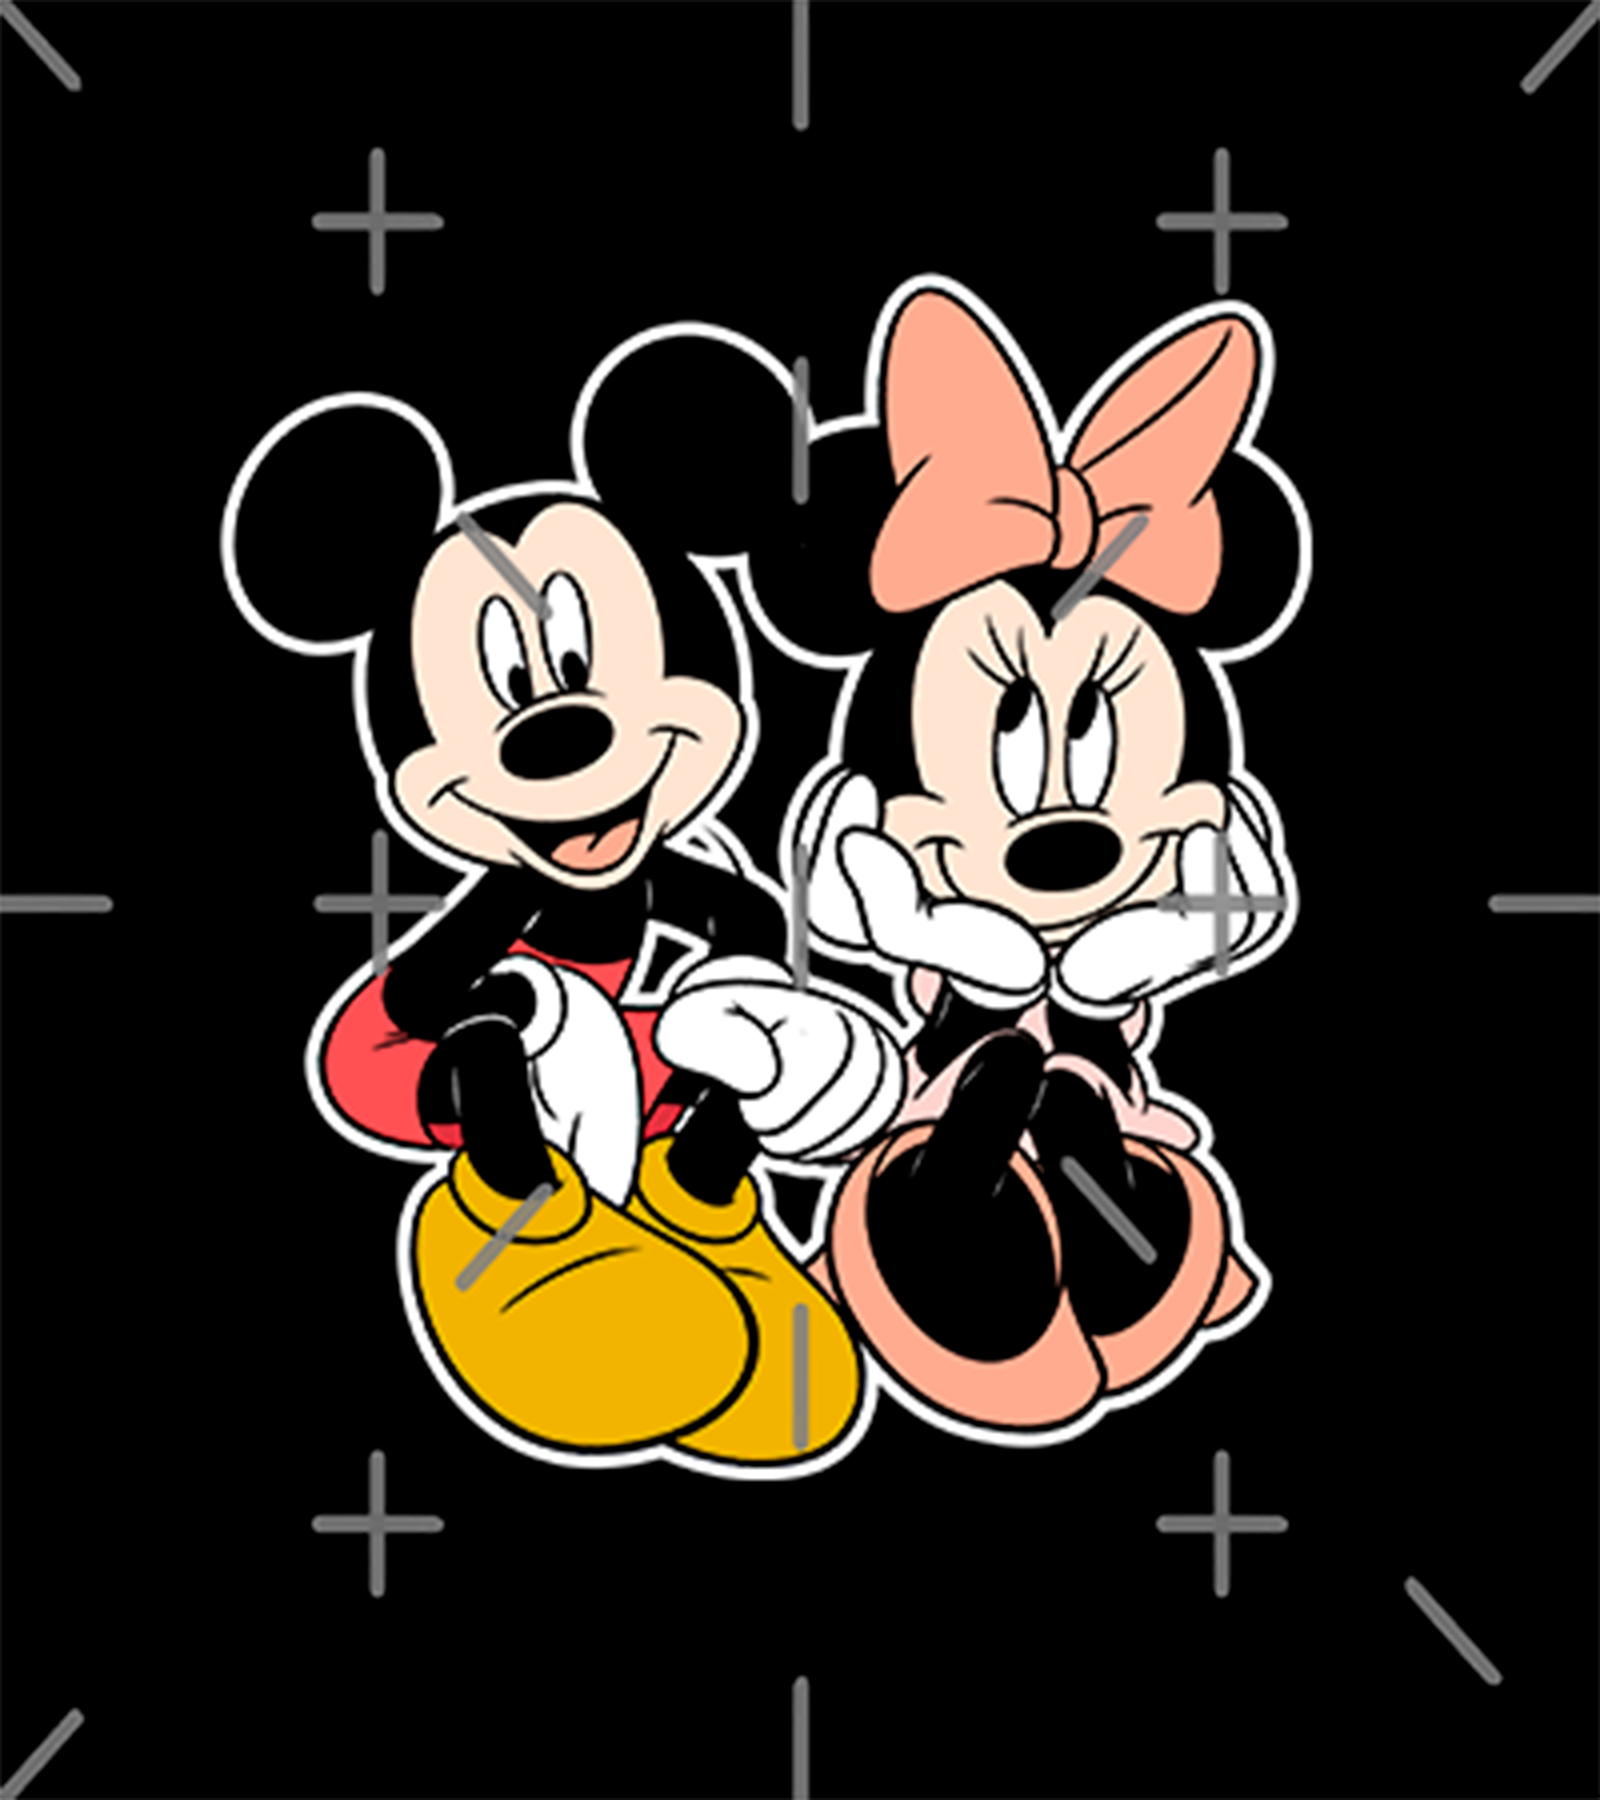 Polera Minnie y Mickey